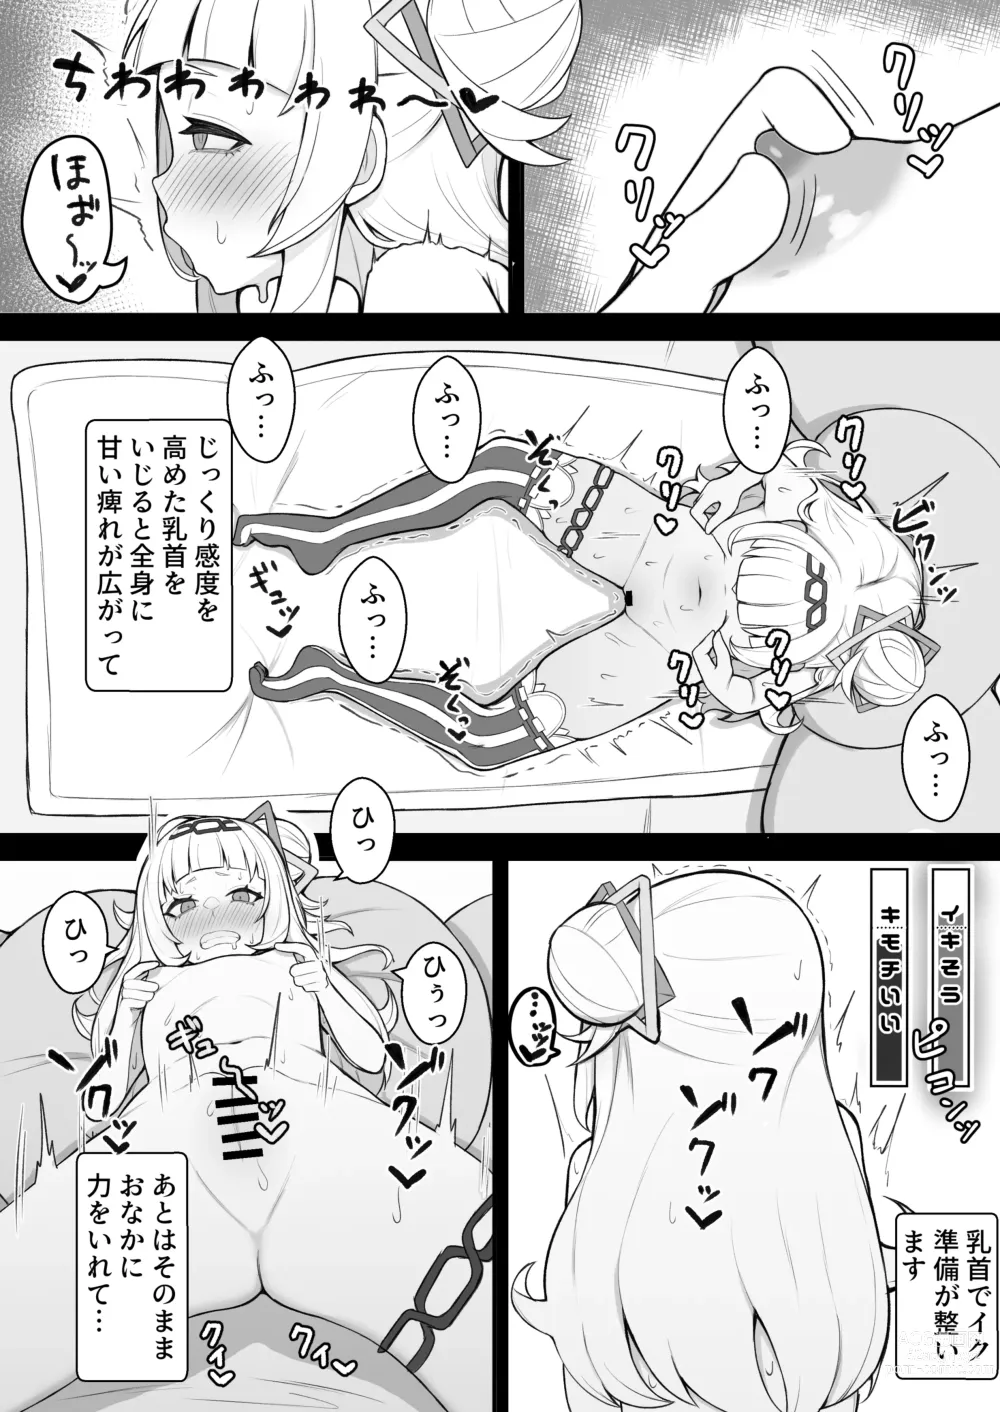 Page 7 of doujinshi Tensai Mahou Shoujo Chikunii Dai Shippai Hon